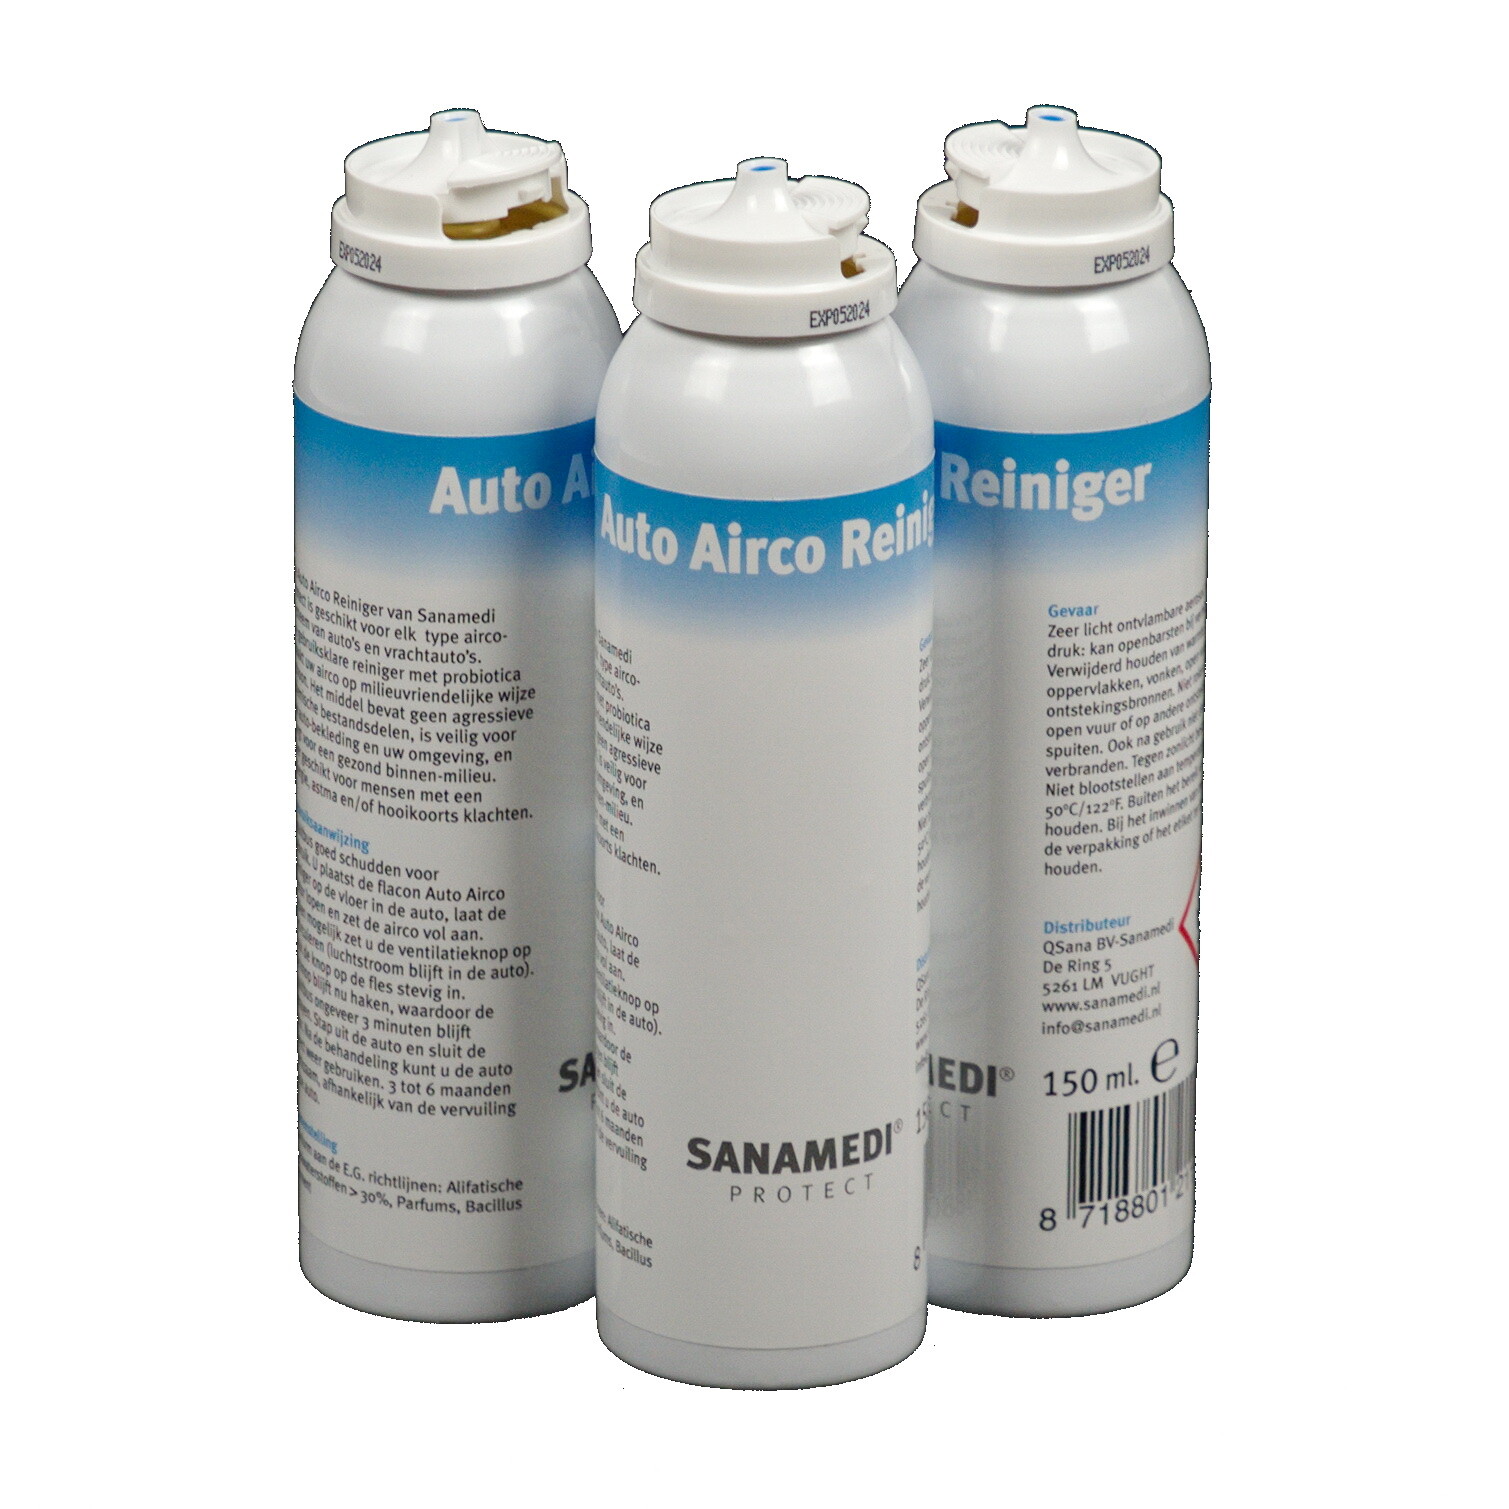 Auto Airco Reiniger anti-allergeen